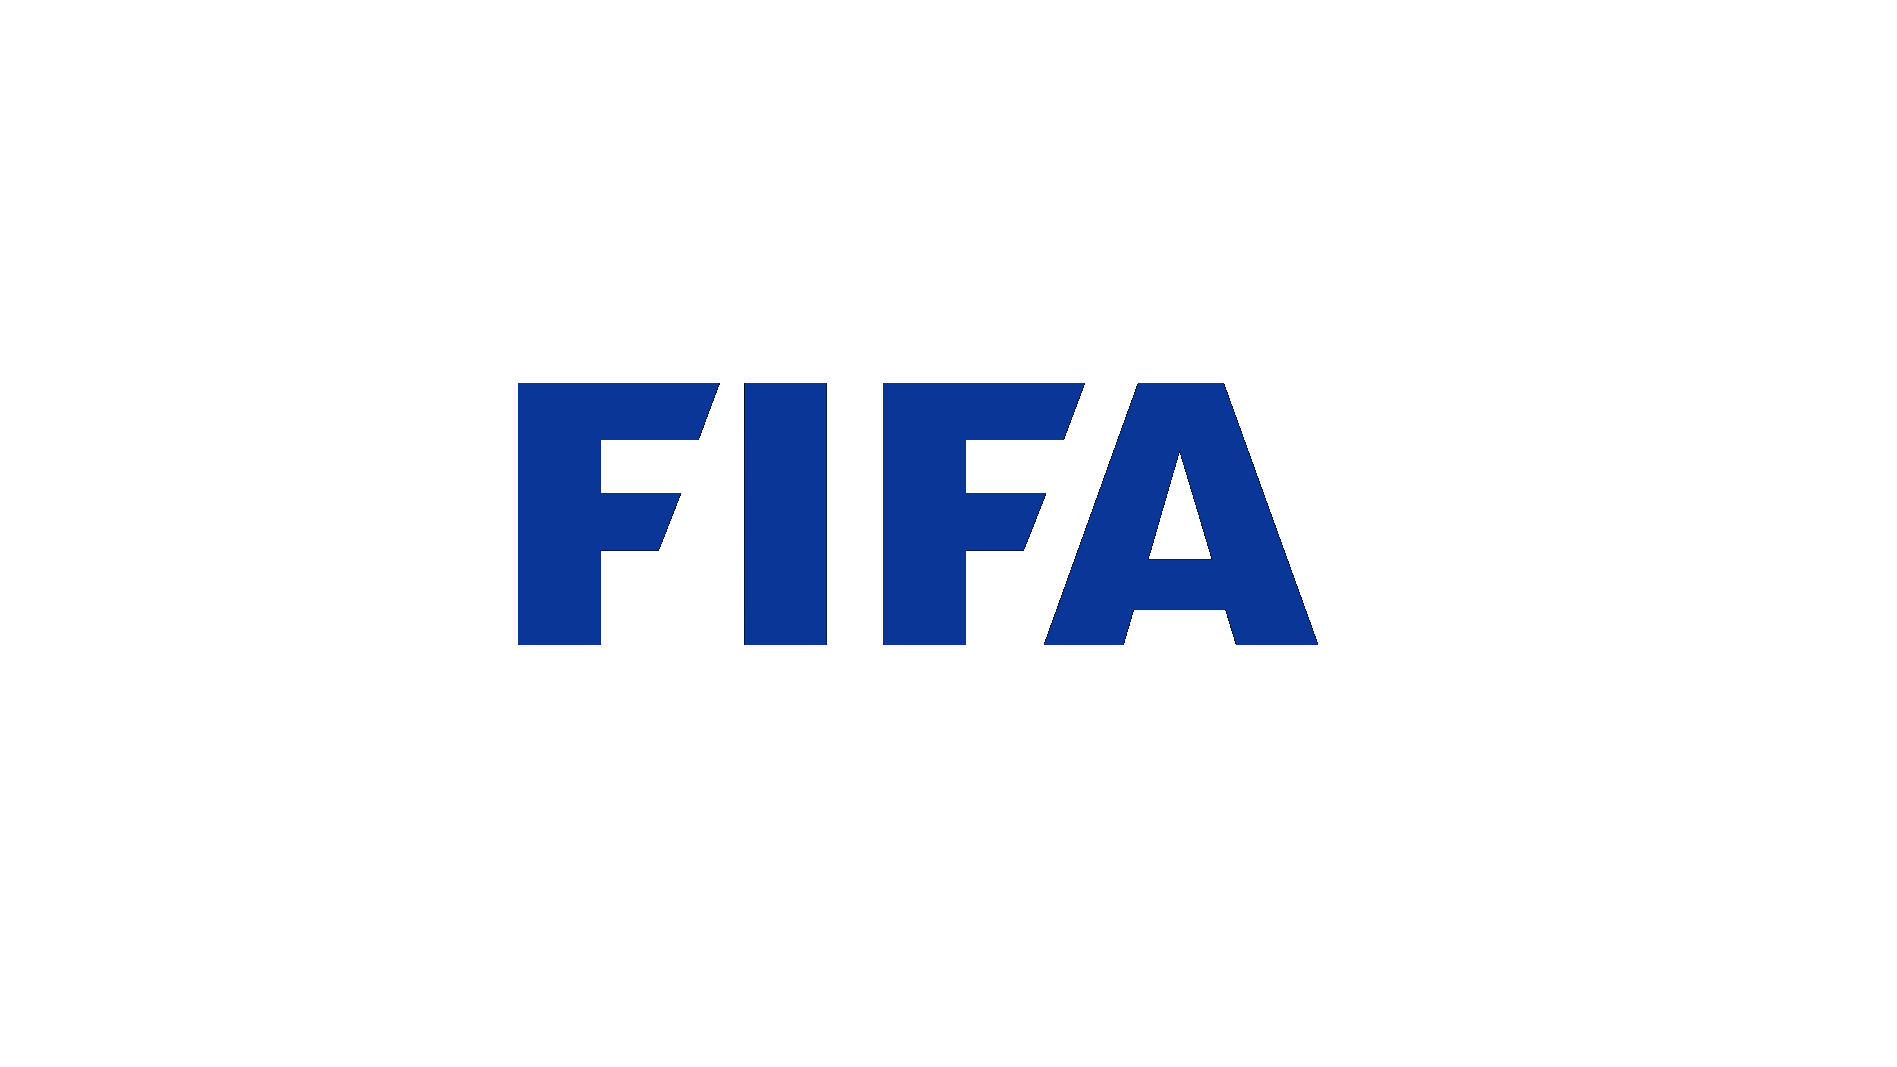 Fifa nsp. FIFA логотип. Первый логотип ФИФА. ФИФА надпись. Международная Федерация футбола.